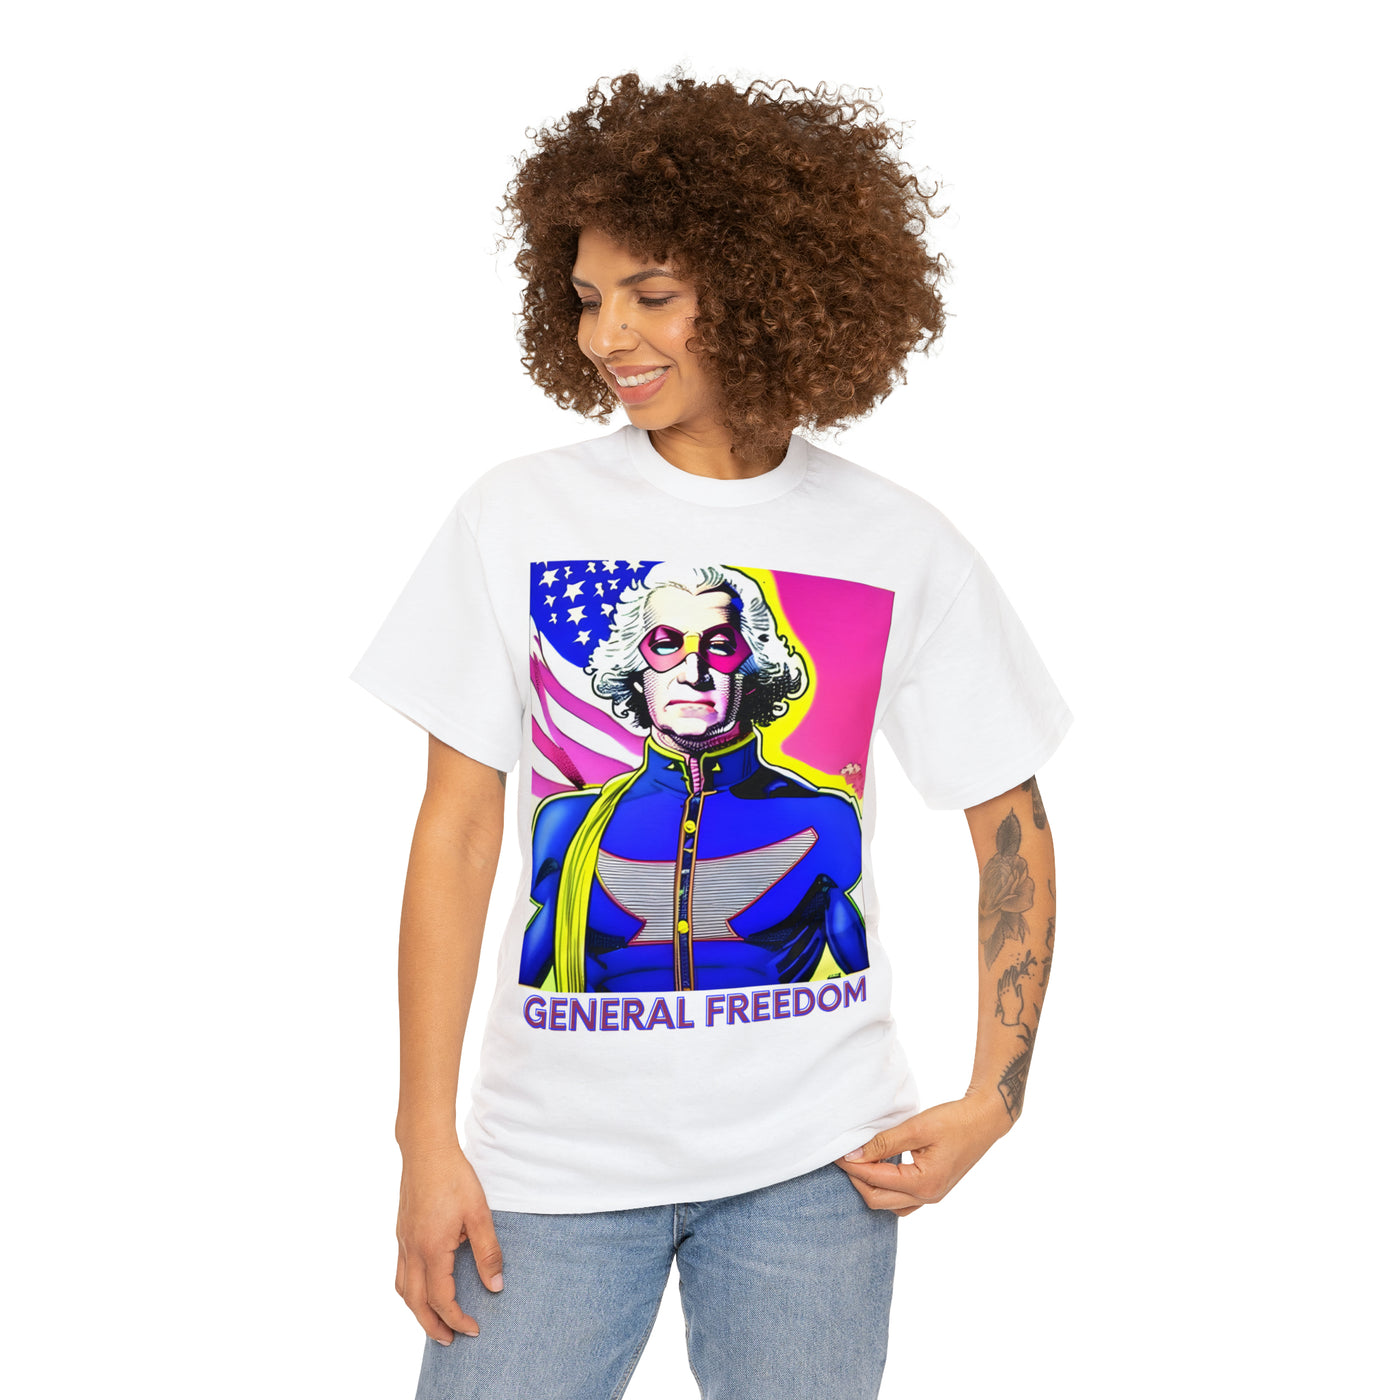 George Washington 'General Freedom' Patriotic Super Hero T-Shirt